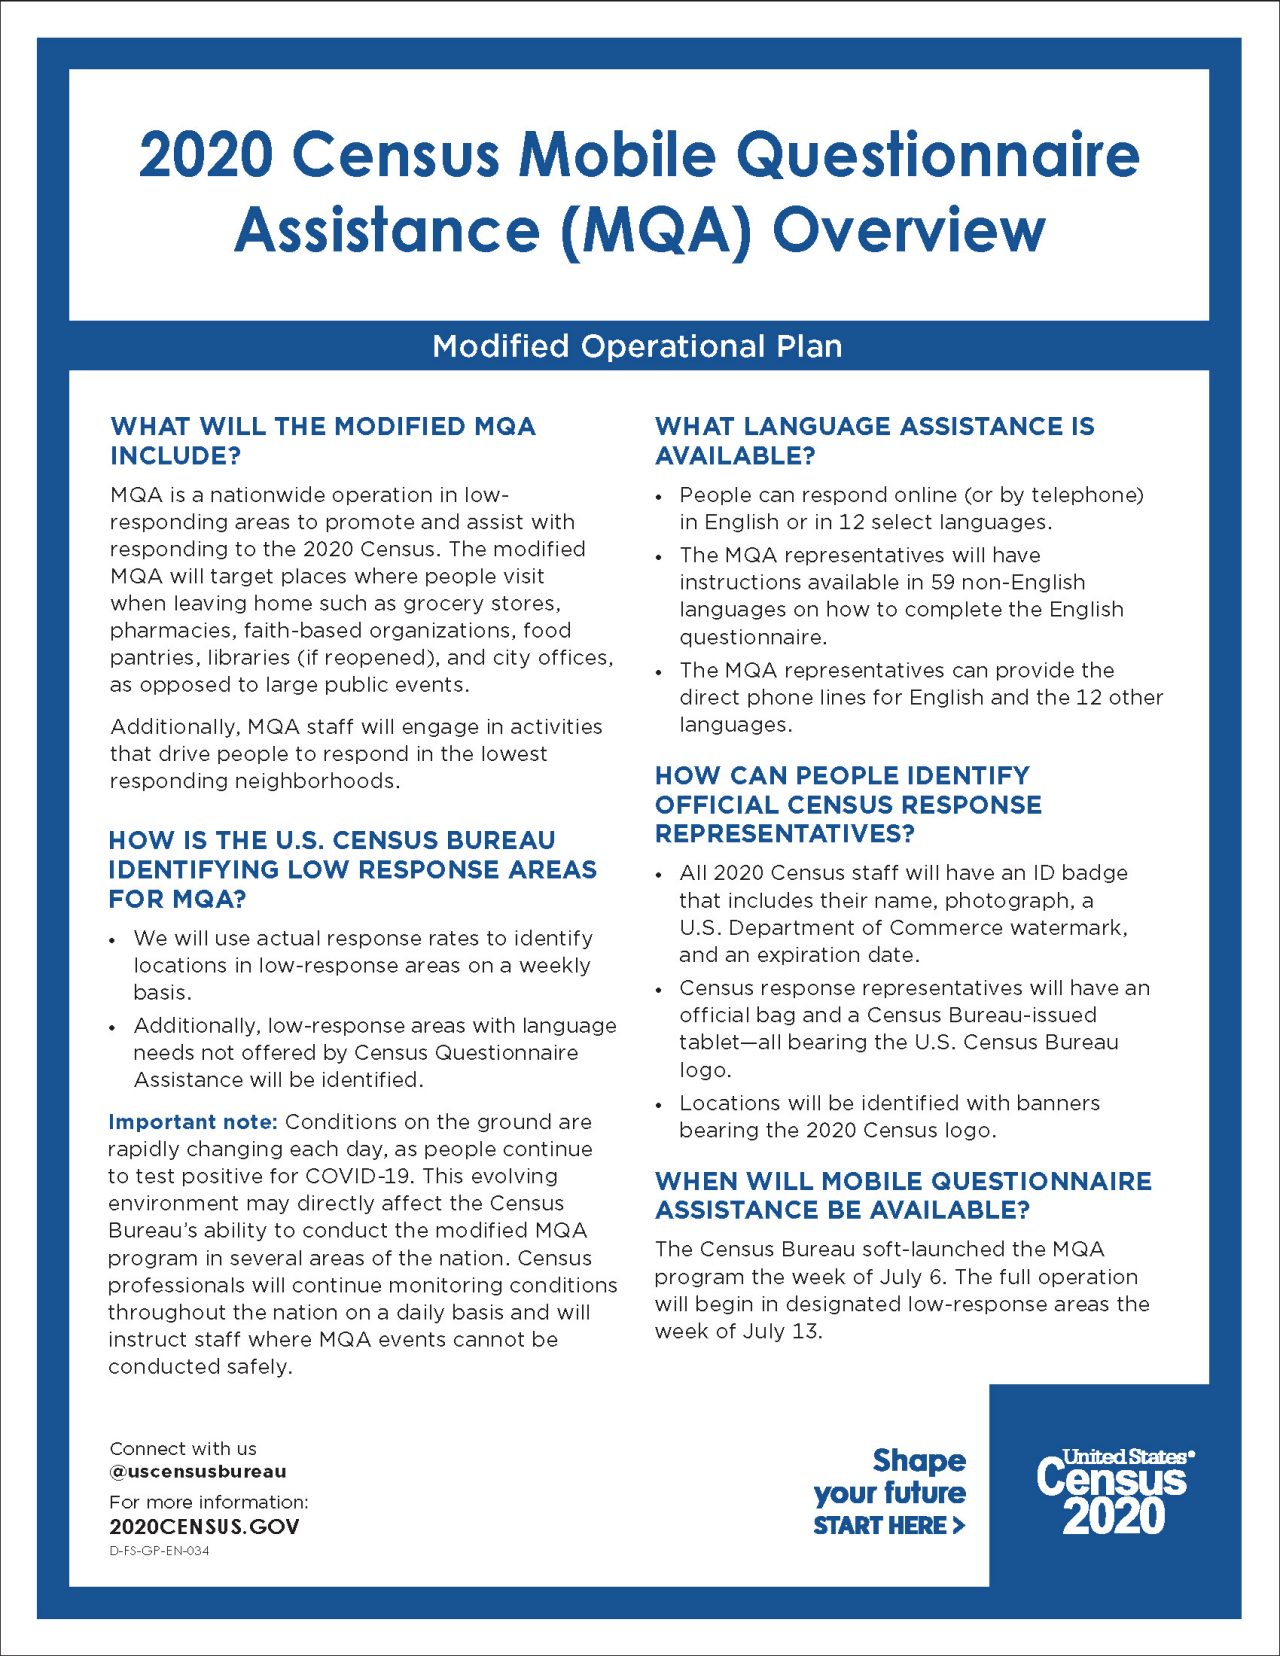 2020 Census Mobile Questionnaire Assistance Overview